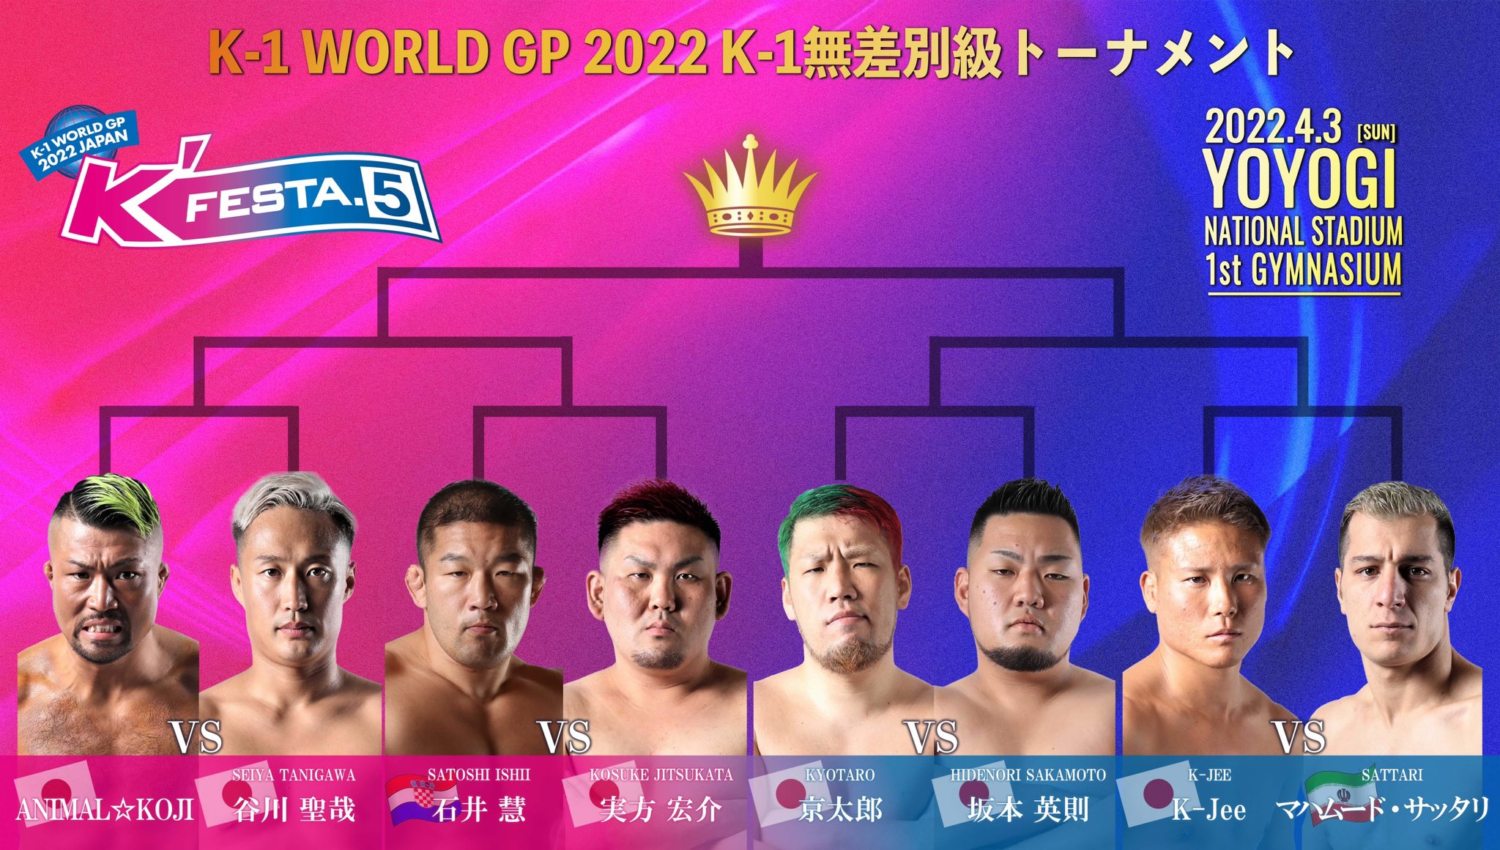 　K-1 WORLD GP 2022 JAPAN ～K’FESTA.5👊みて📺